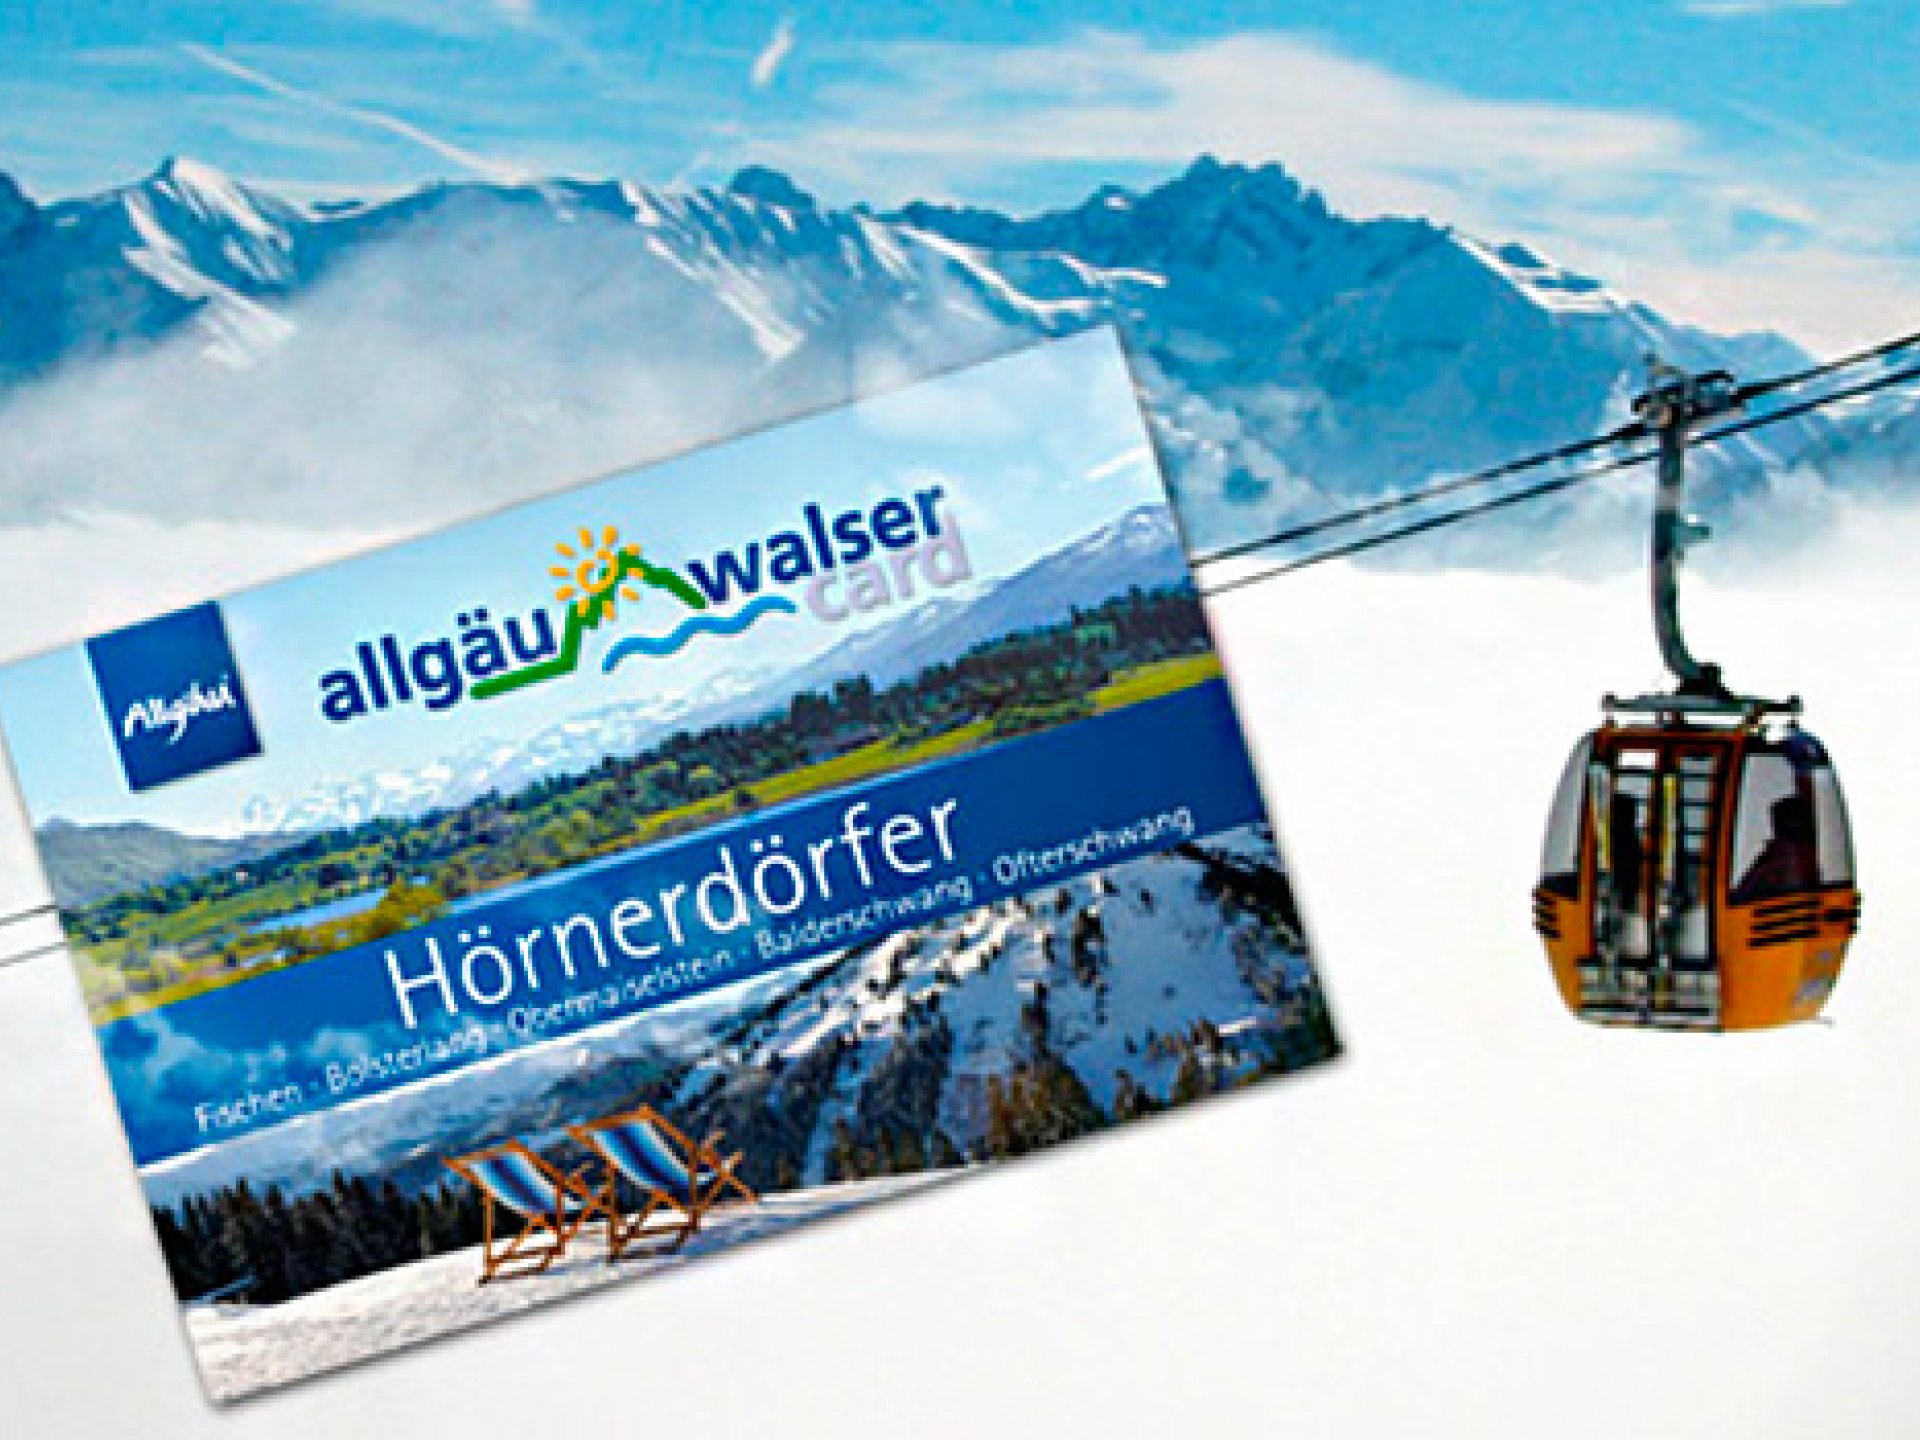 Allgäu-Walser-Card in den Hörnerdörfern